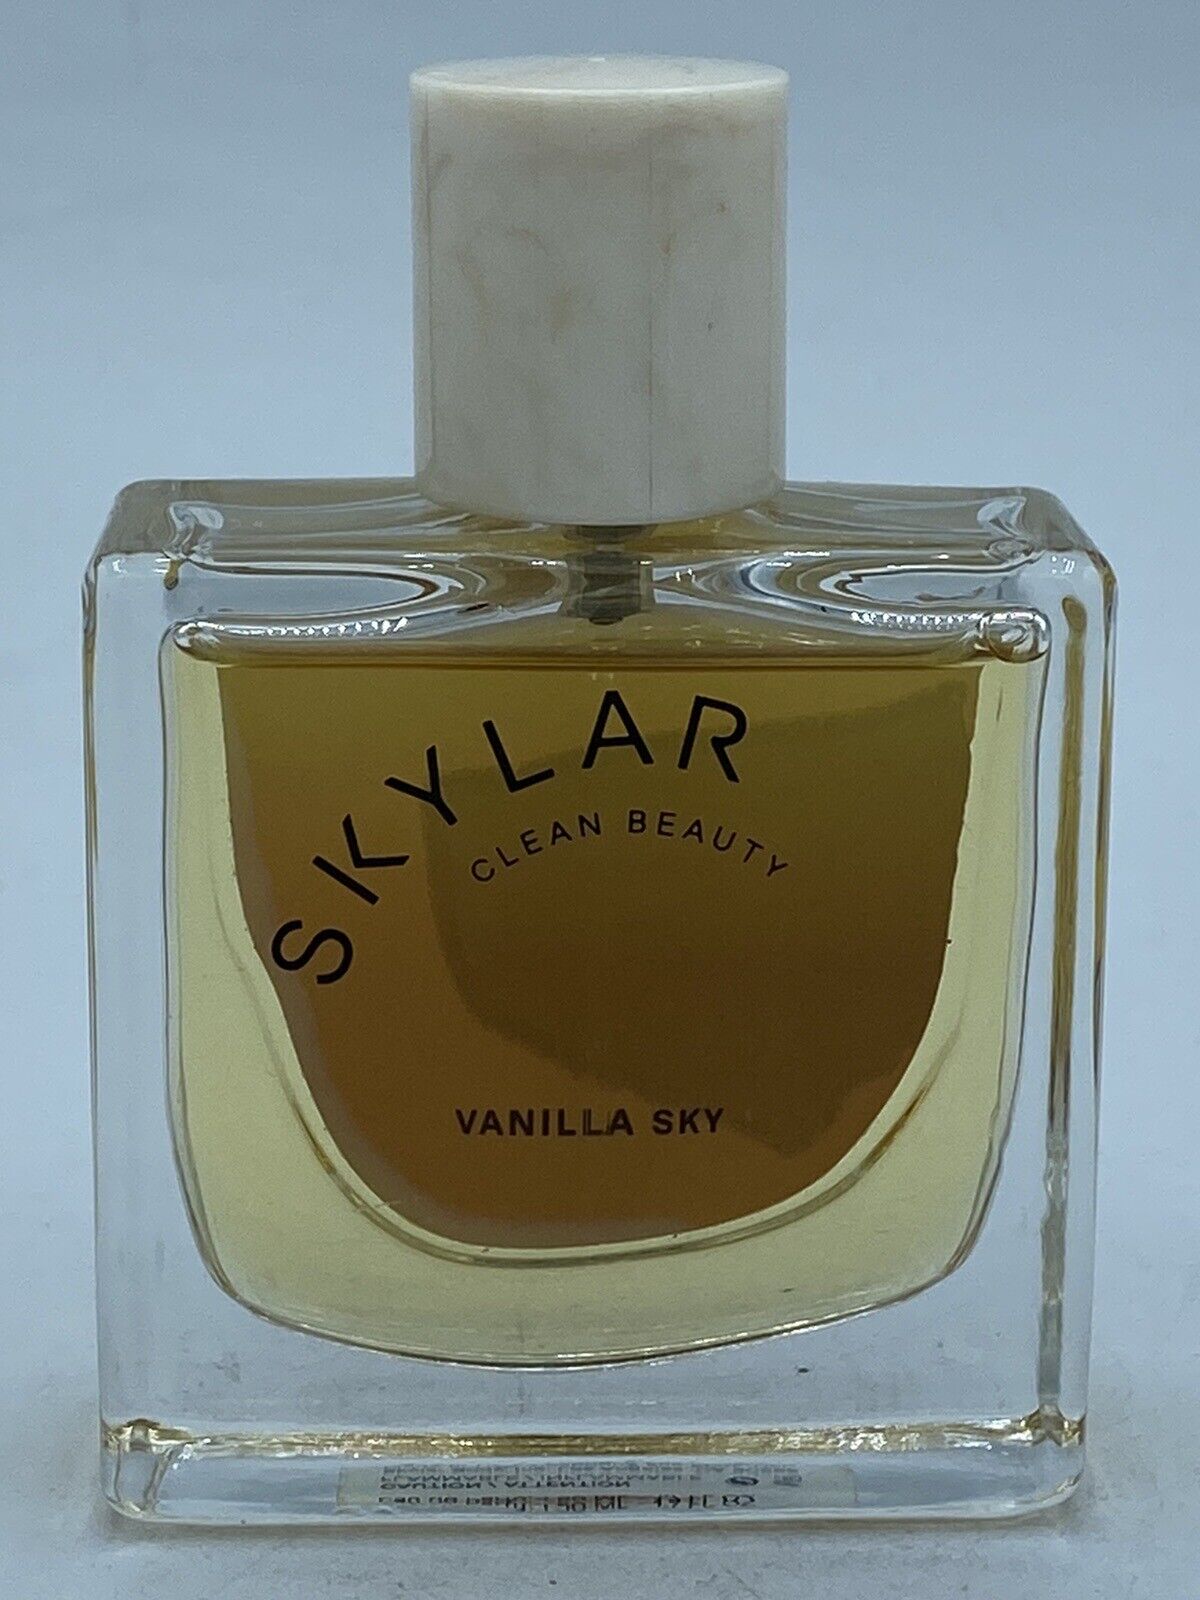 Skylar Clean Beauty Vanilla Sky EDP 1.7 Fl oz. 50 Ml About 95% Full Without Box.